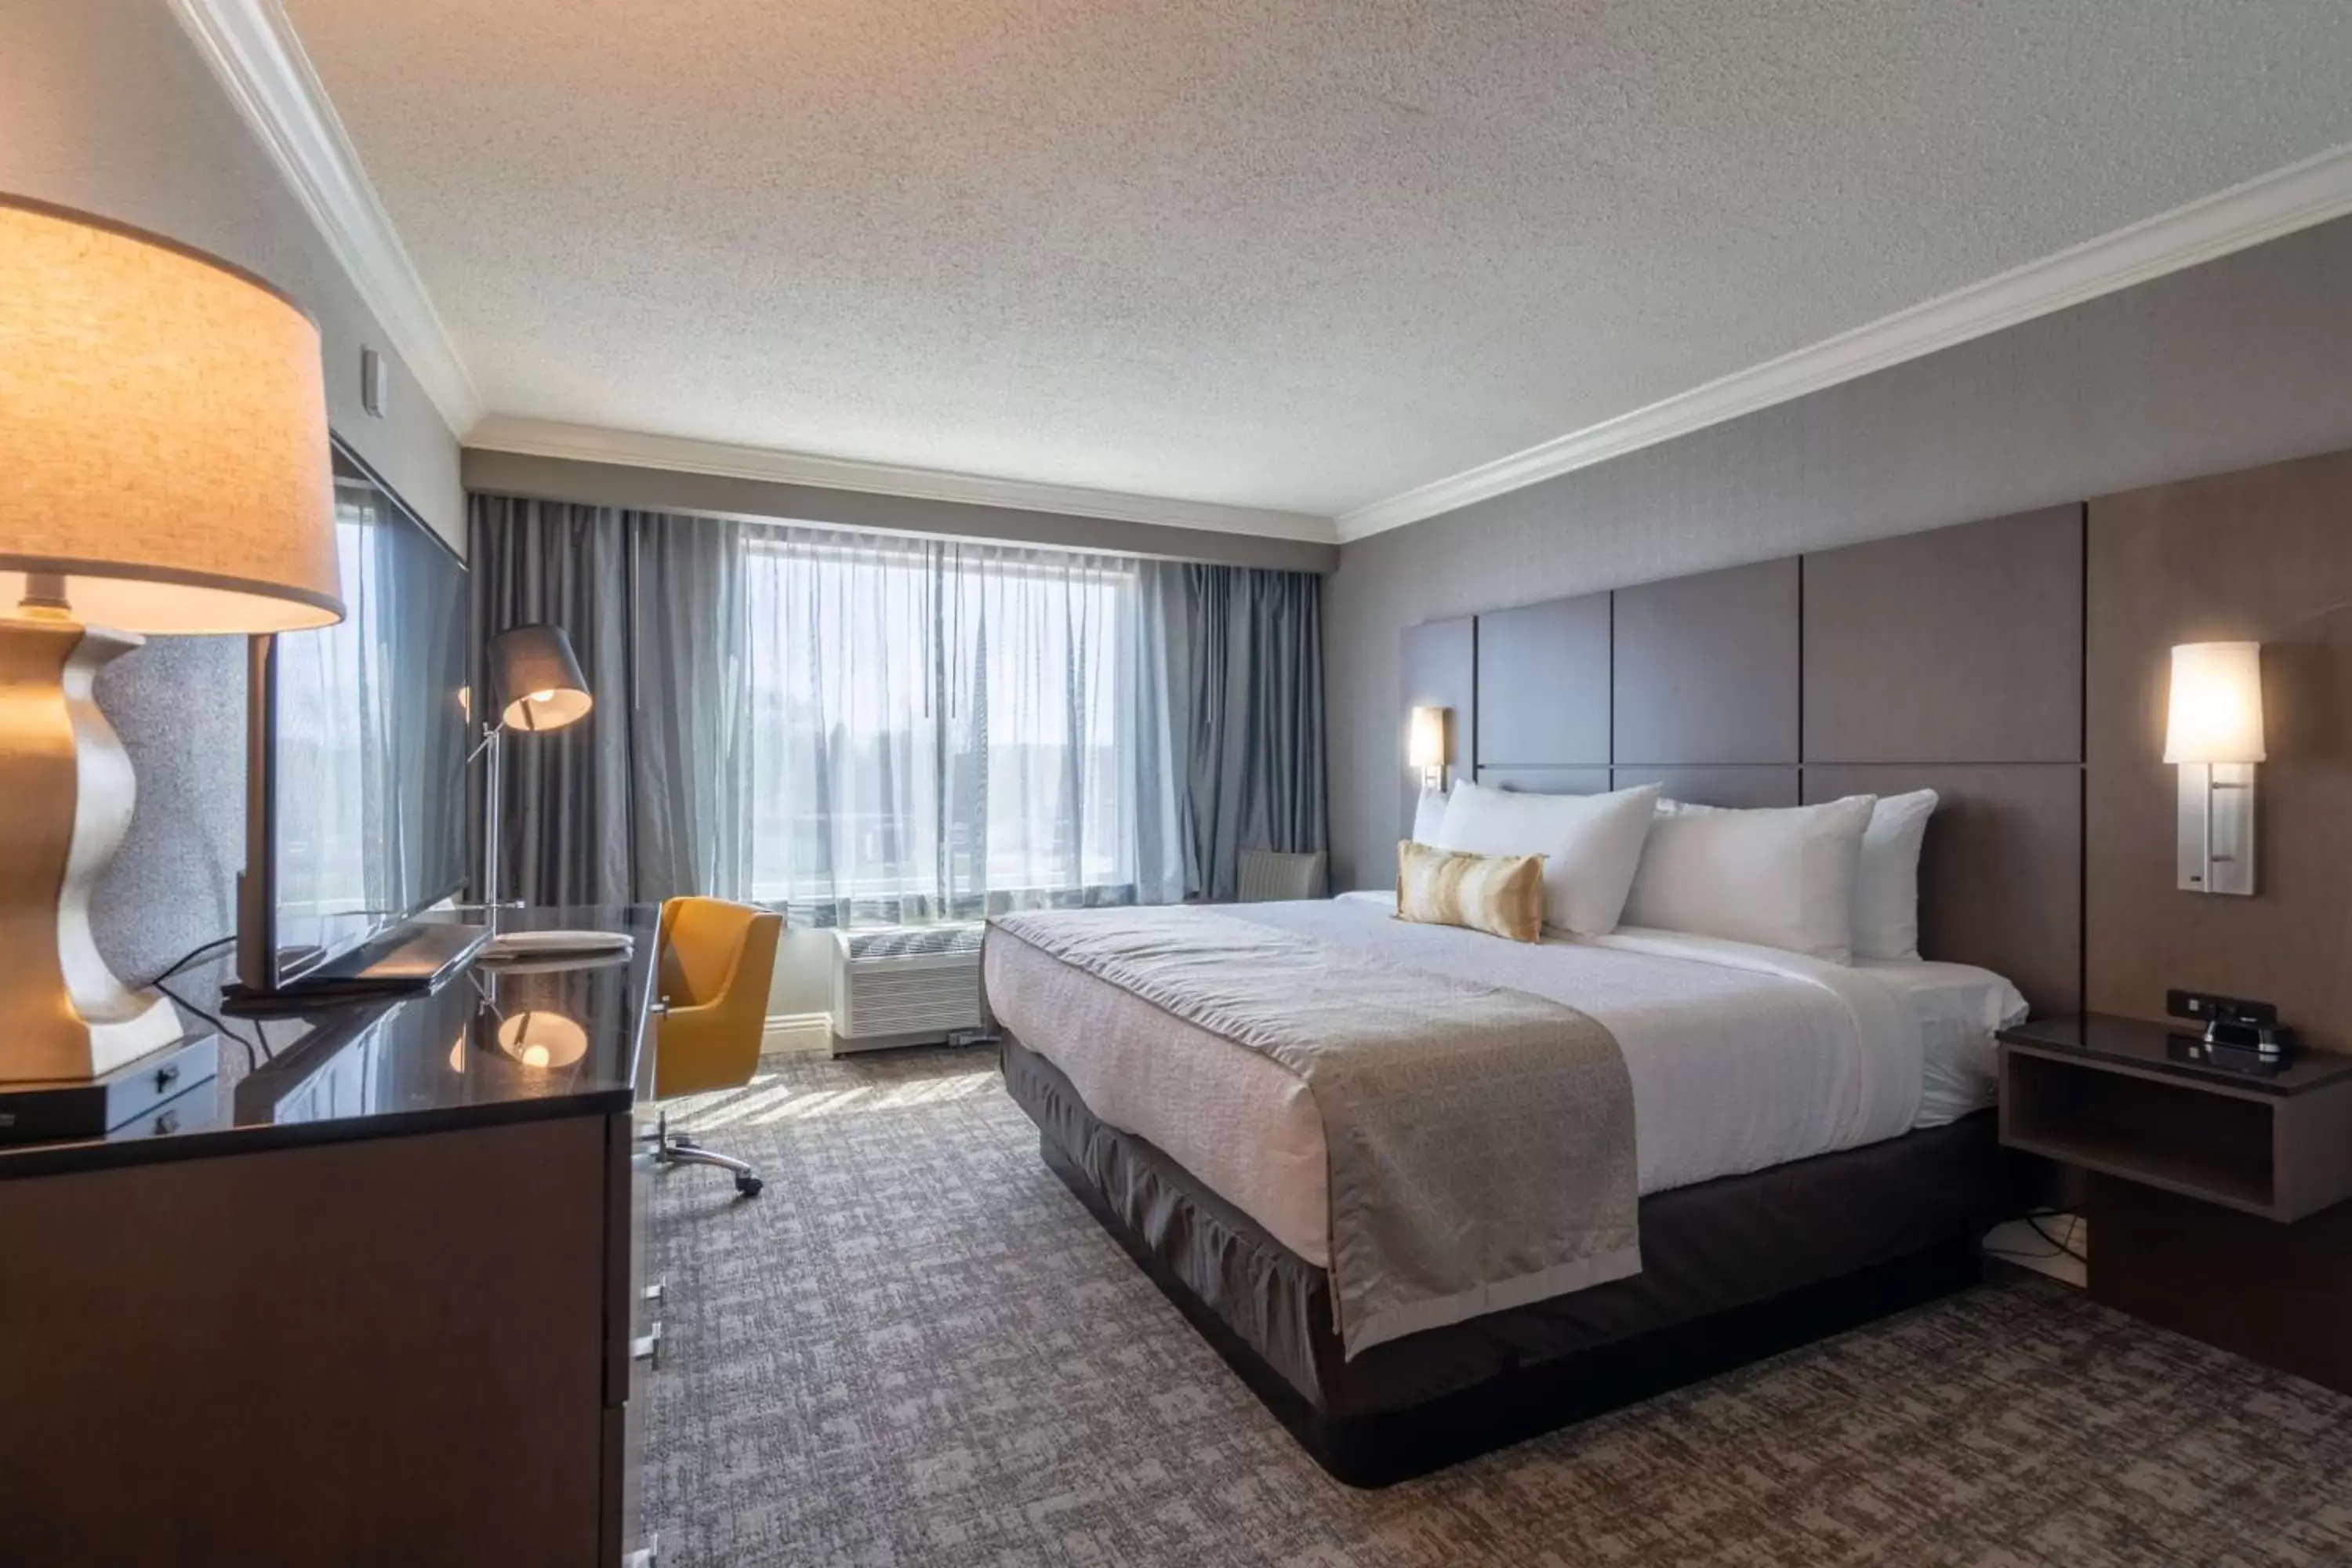 Bedroom, Bed in Best Western Premier Airport/Expo Center Hotel